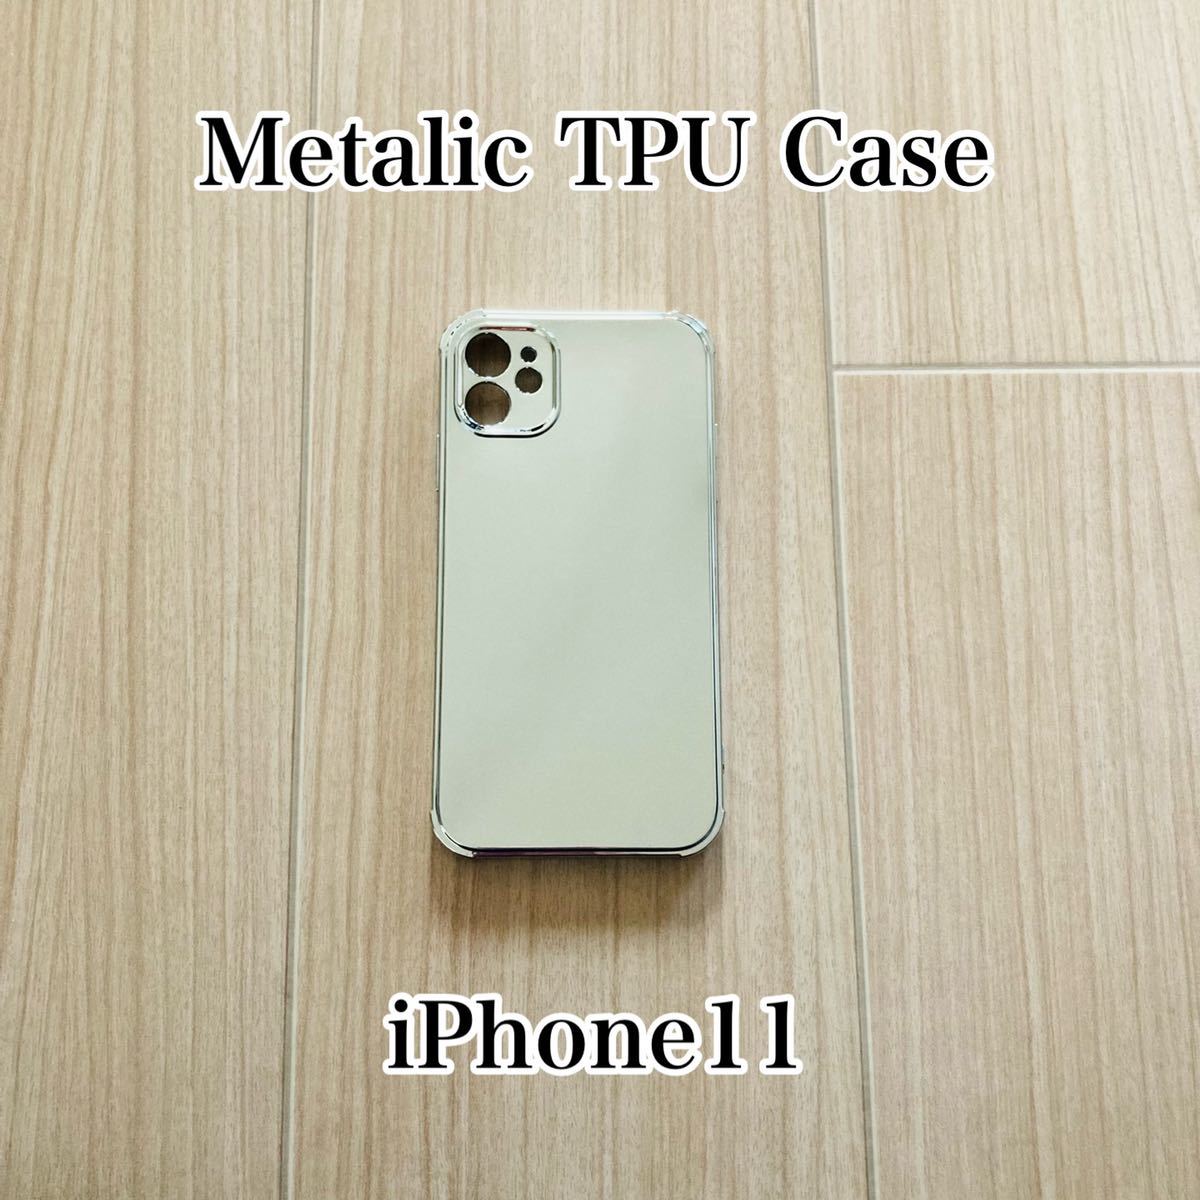 iPhone11 iPhone11ケース 耐衝撃 メタリックケース TPUケース シルバー iPhoneケース スマホケース 送料無料 高品質